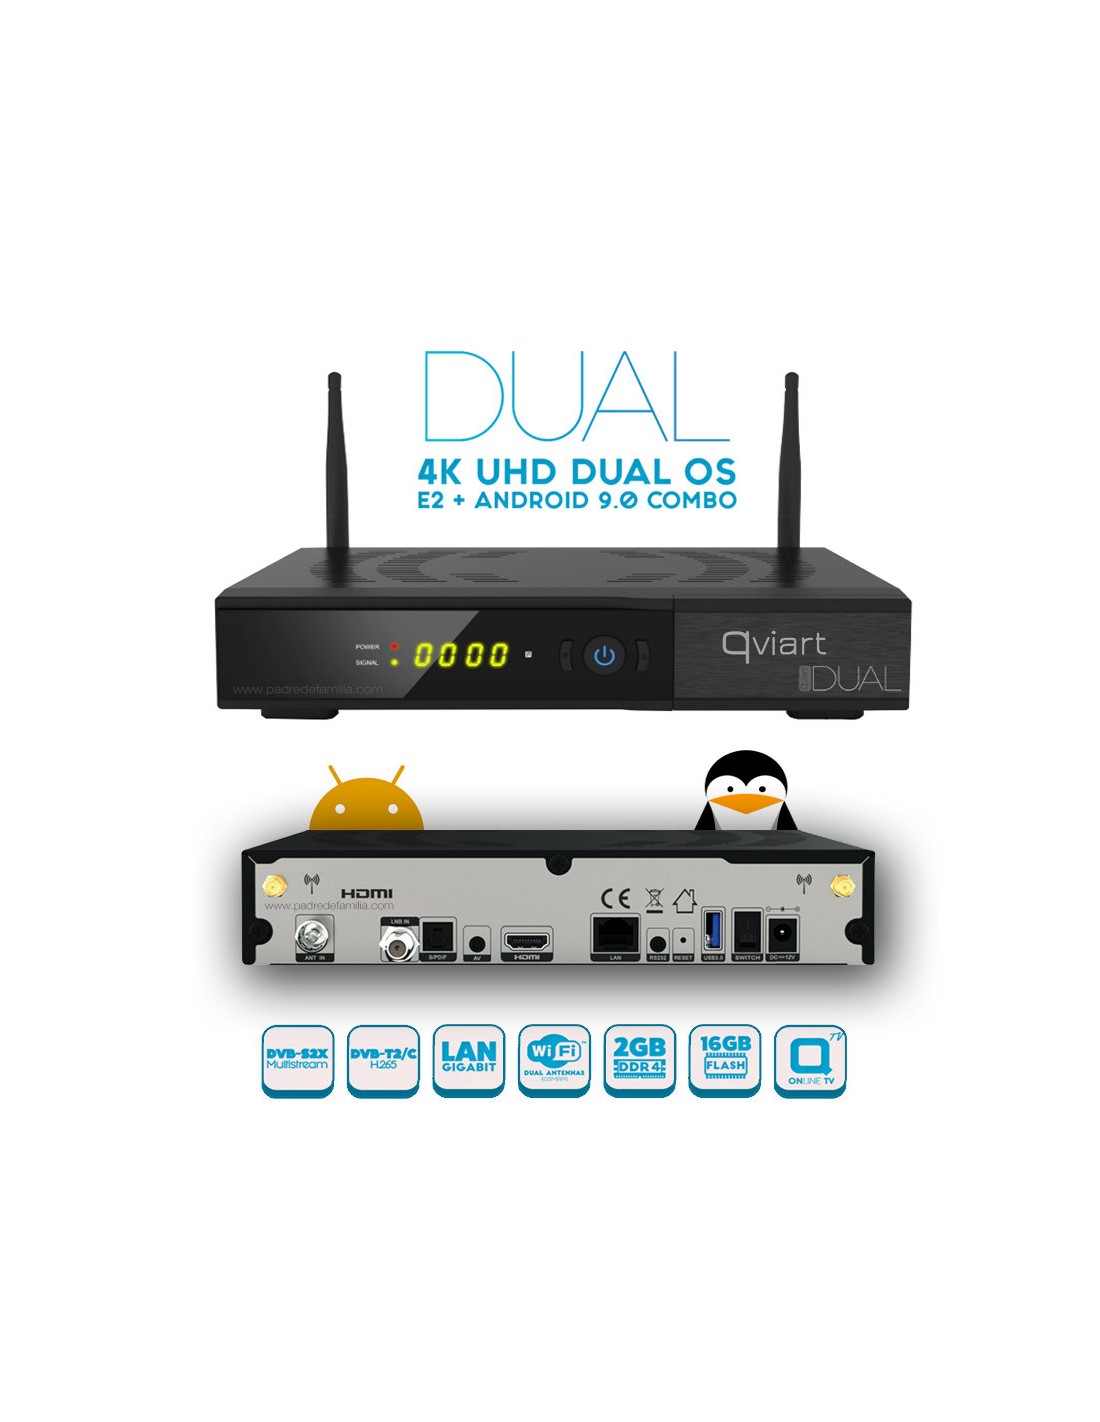 Receptor SAT 4K (DVB-S2X) + TDT (T2/C), H265, 1 Lector tarjetas, Wifi USB  opcional.